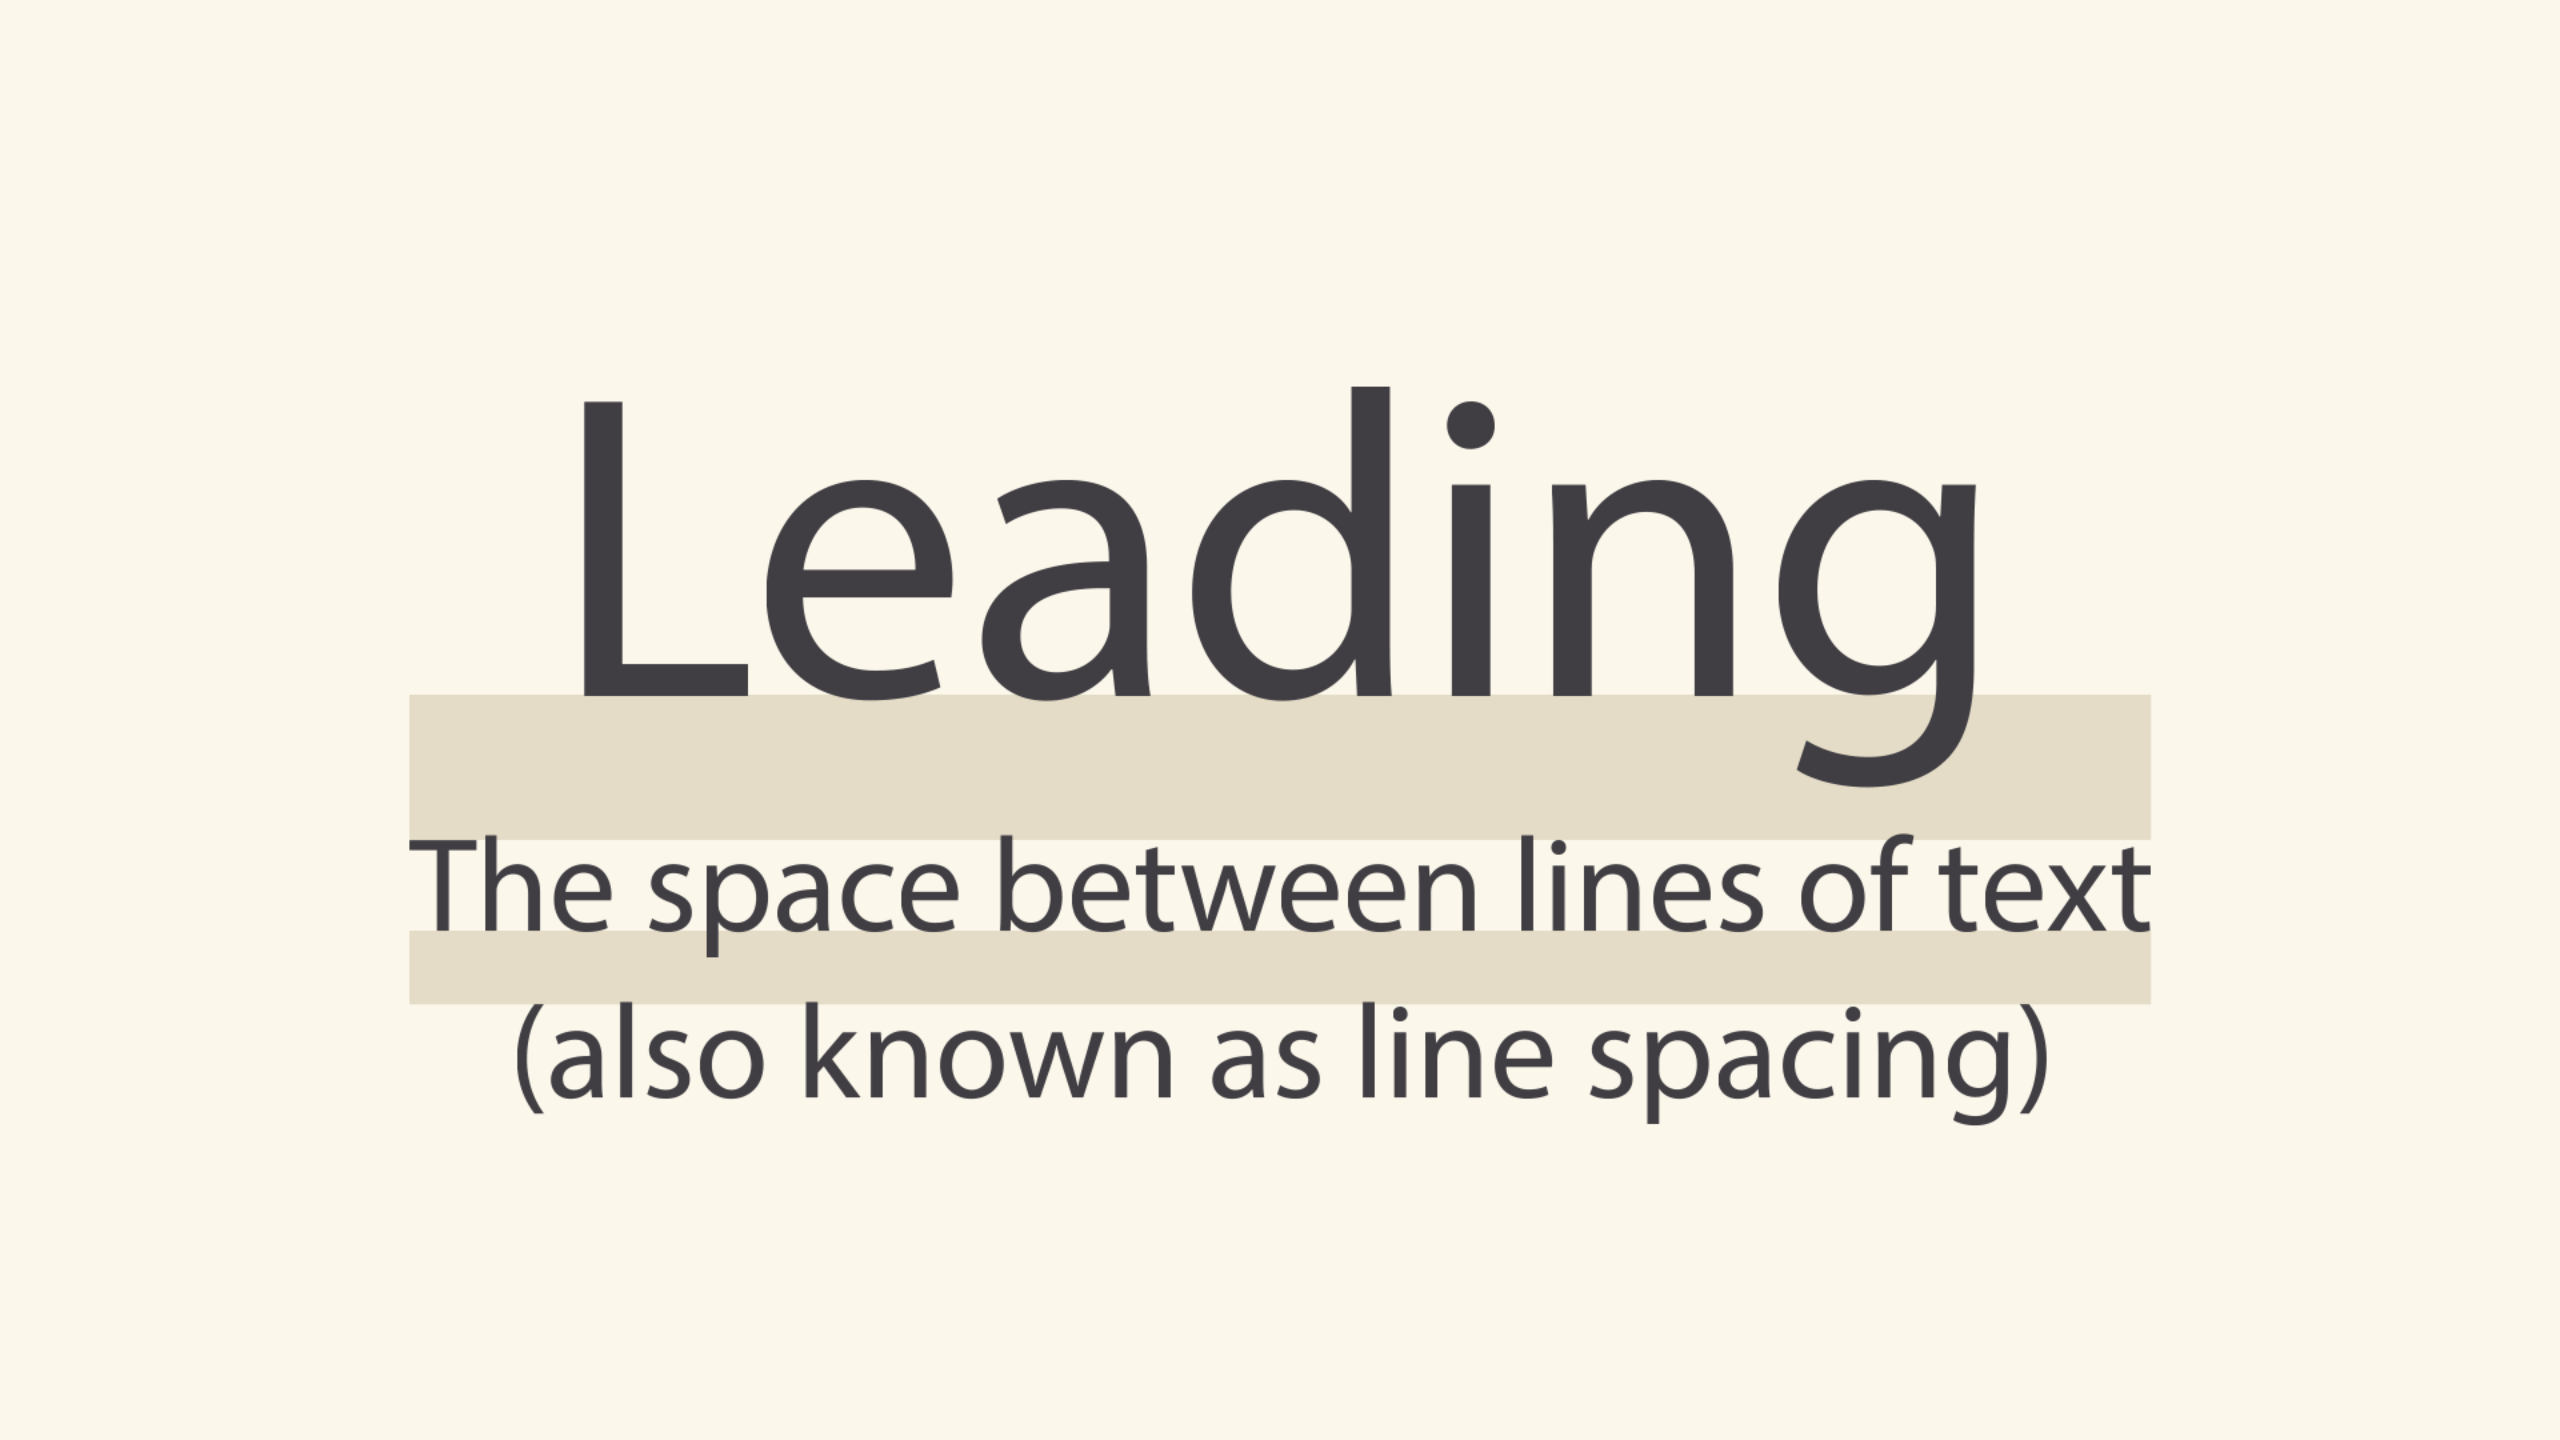 leading, or line spacing